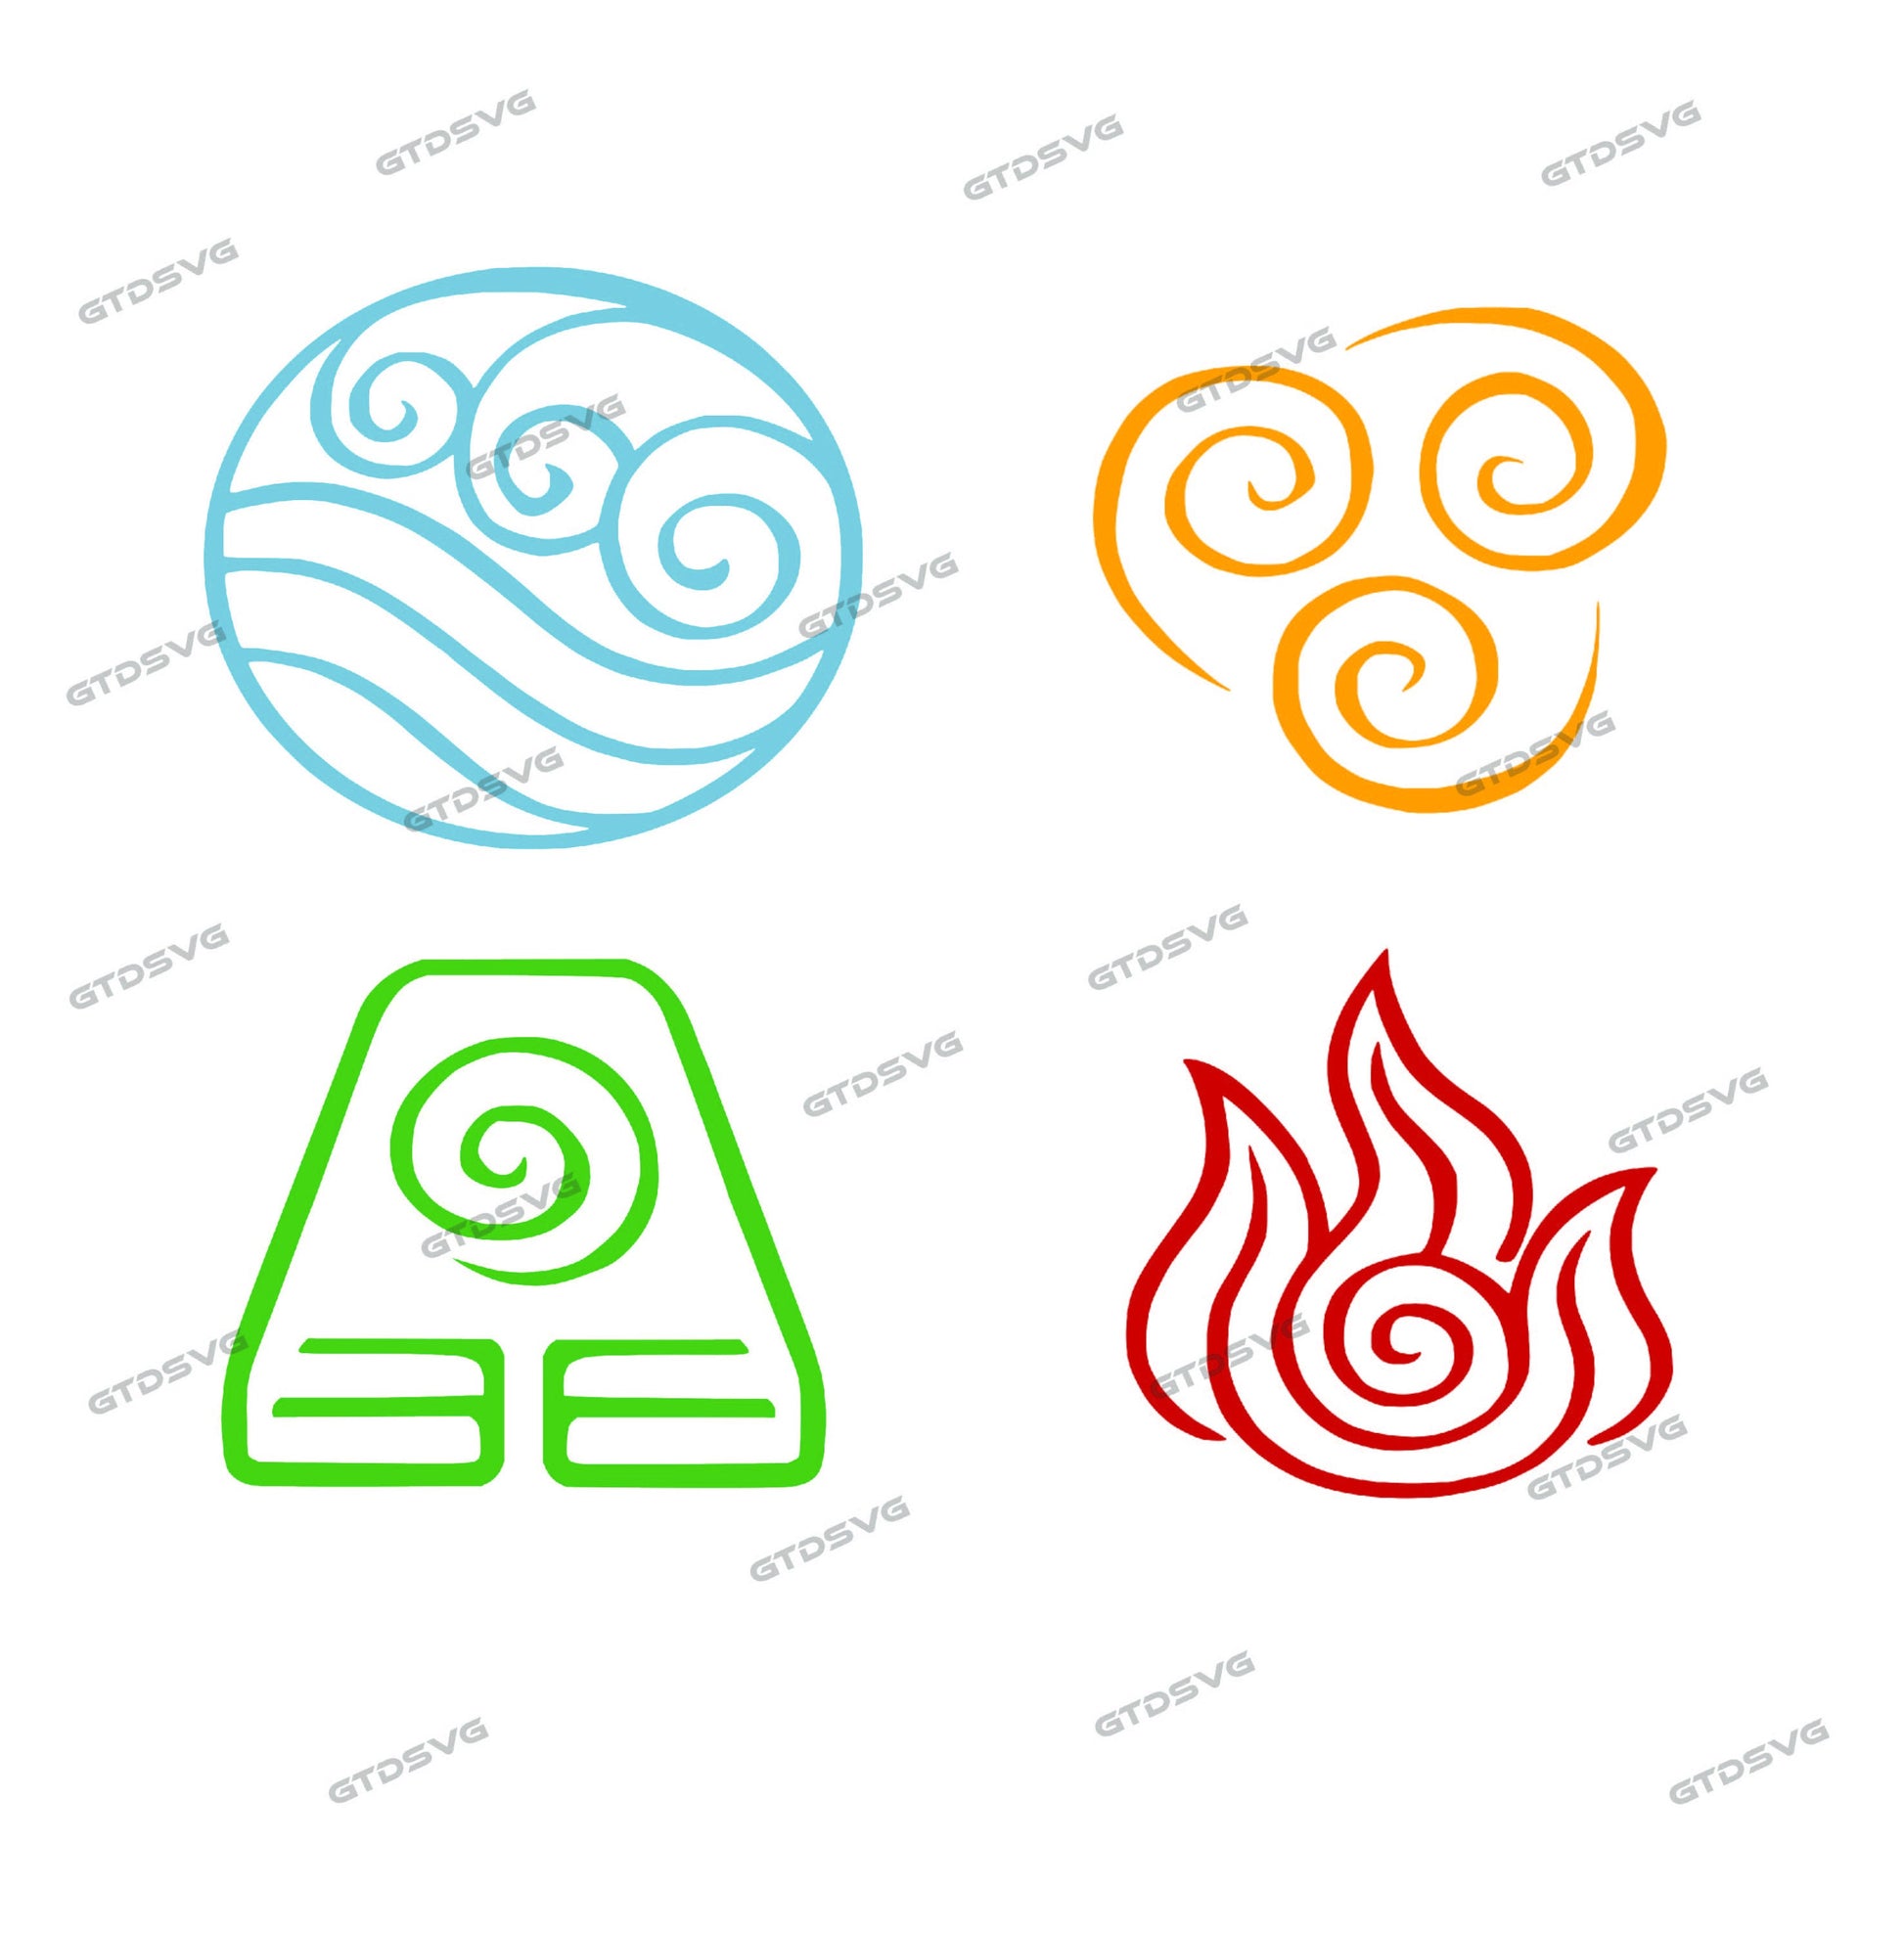 4 elements symbols avatar